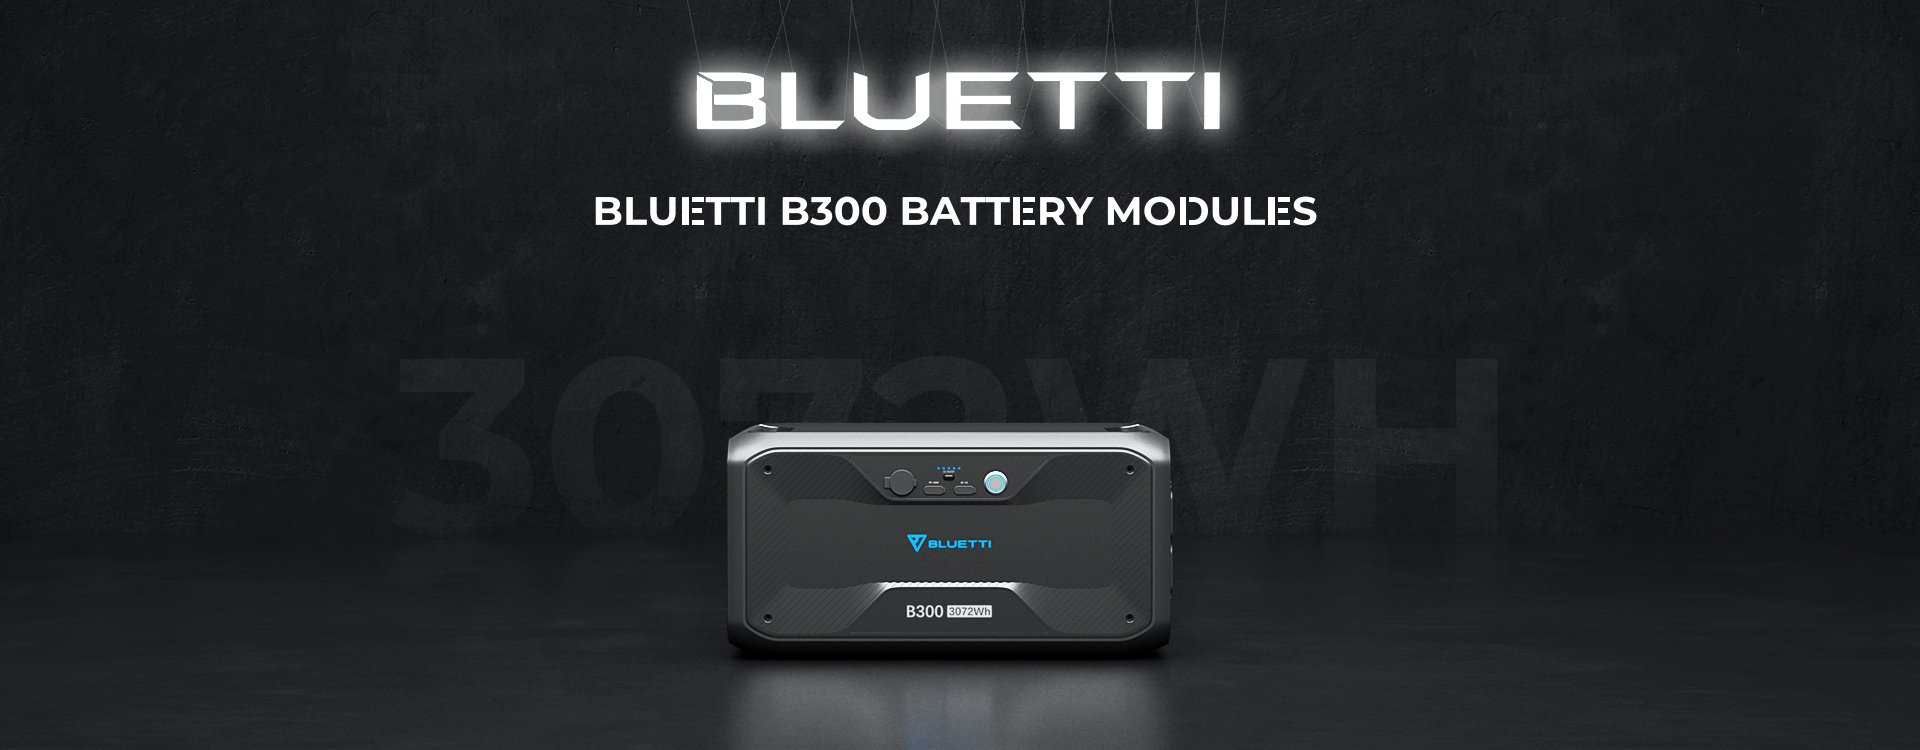 BLUETTI B300 BATTERY MODULES REVIEWS + $300 OFF